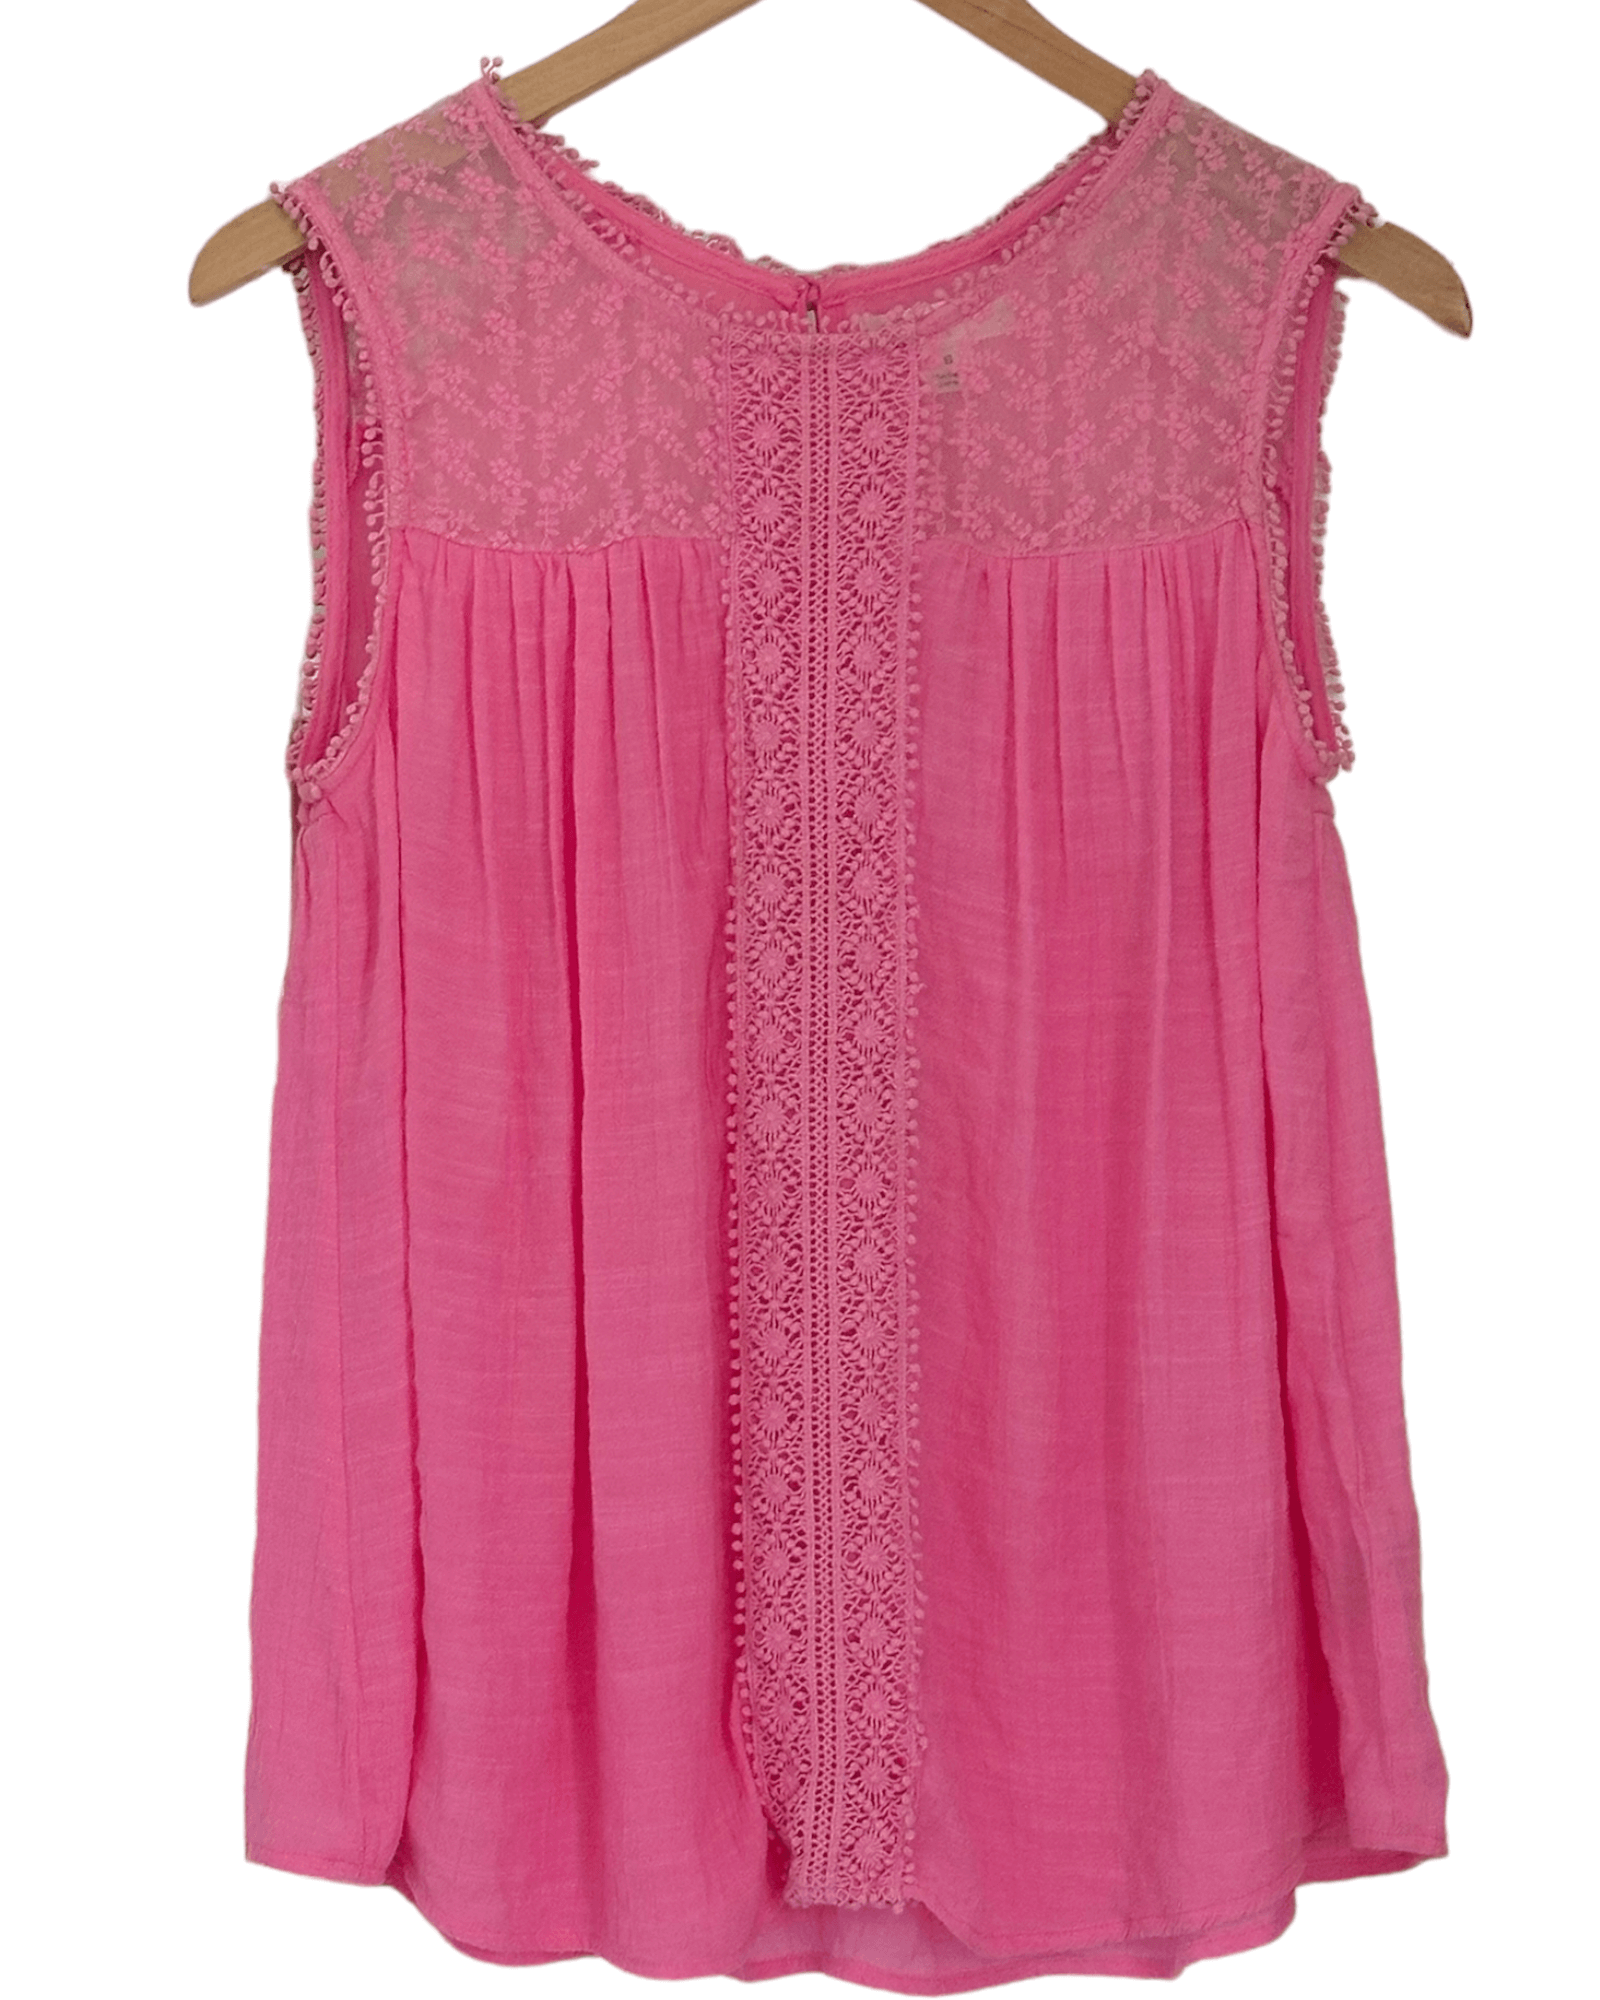 Light Summer STUDIO JPR peony pink crochet lace sleeveless top